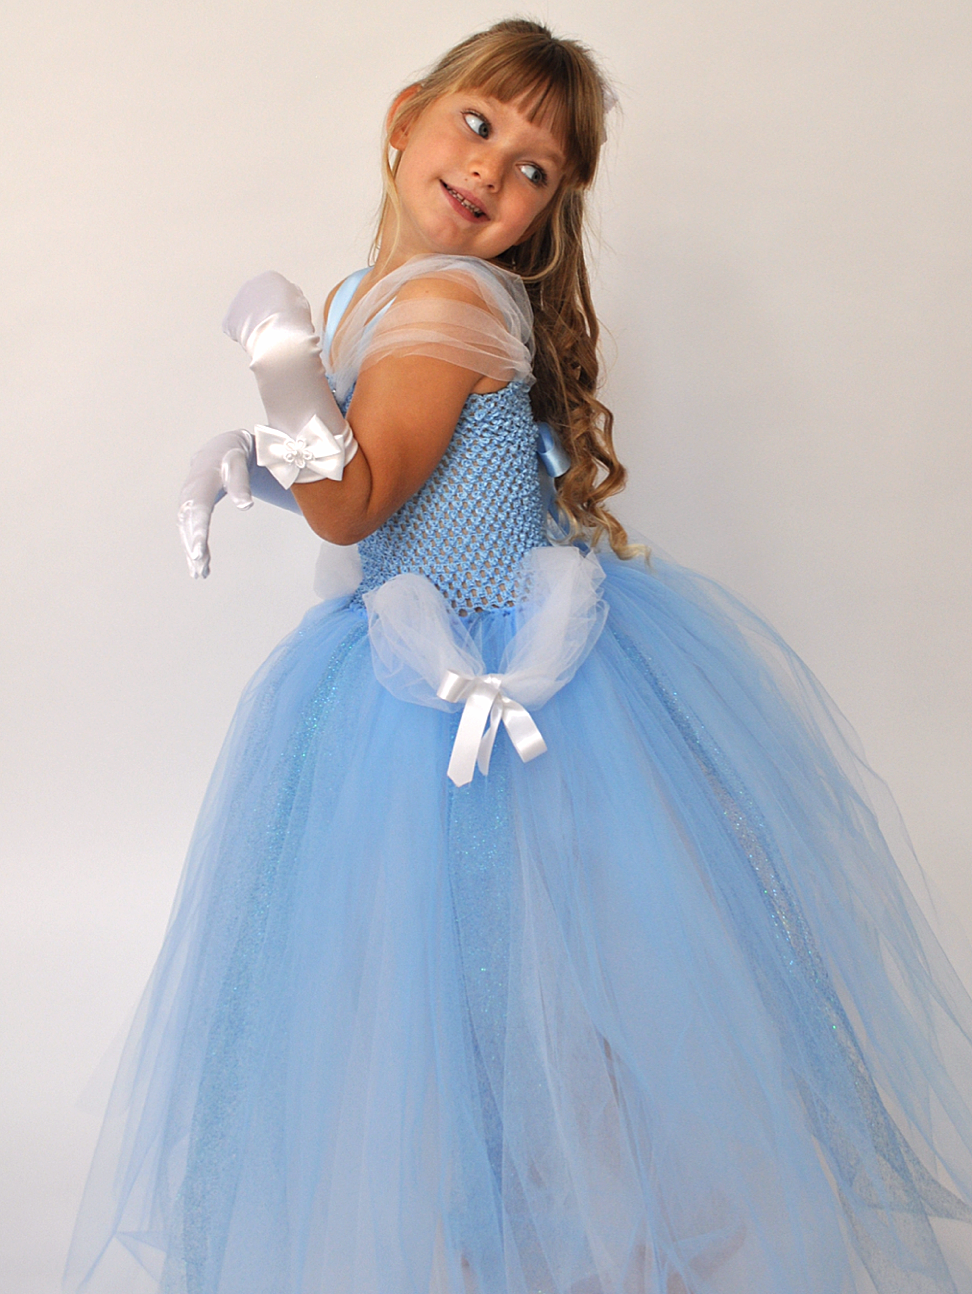 Cinderella Princess Dress